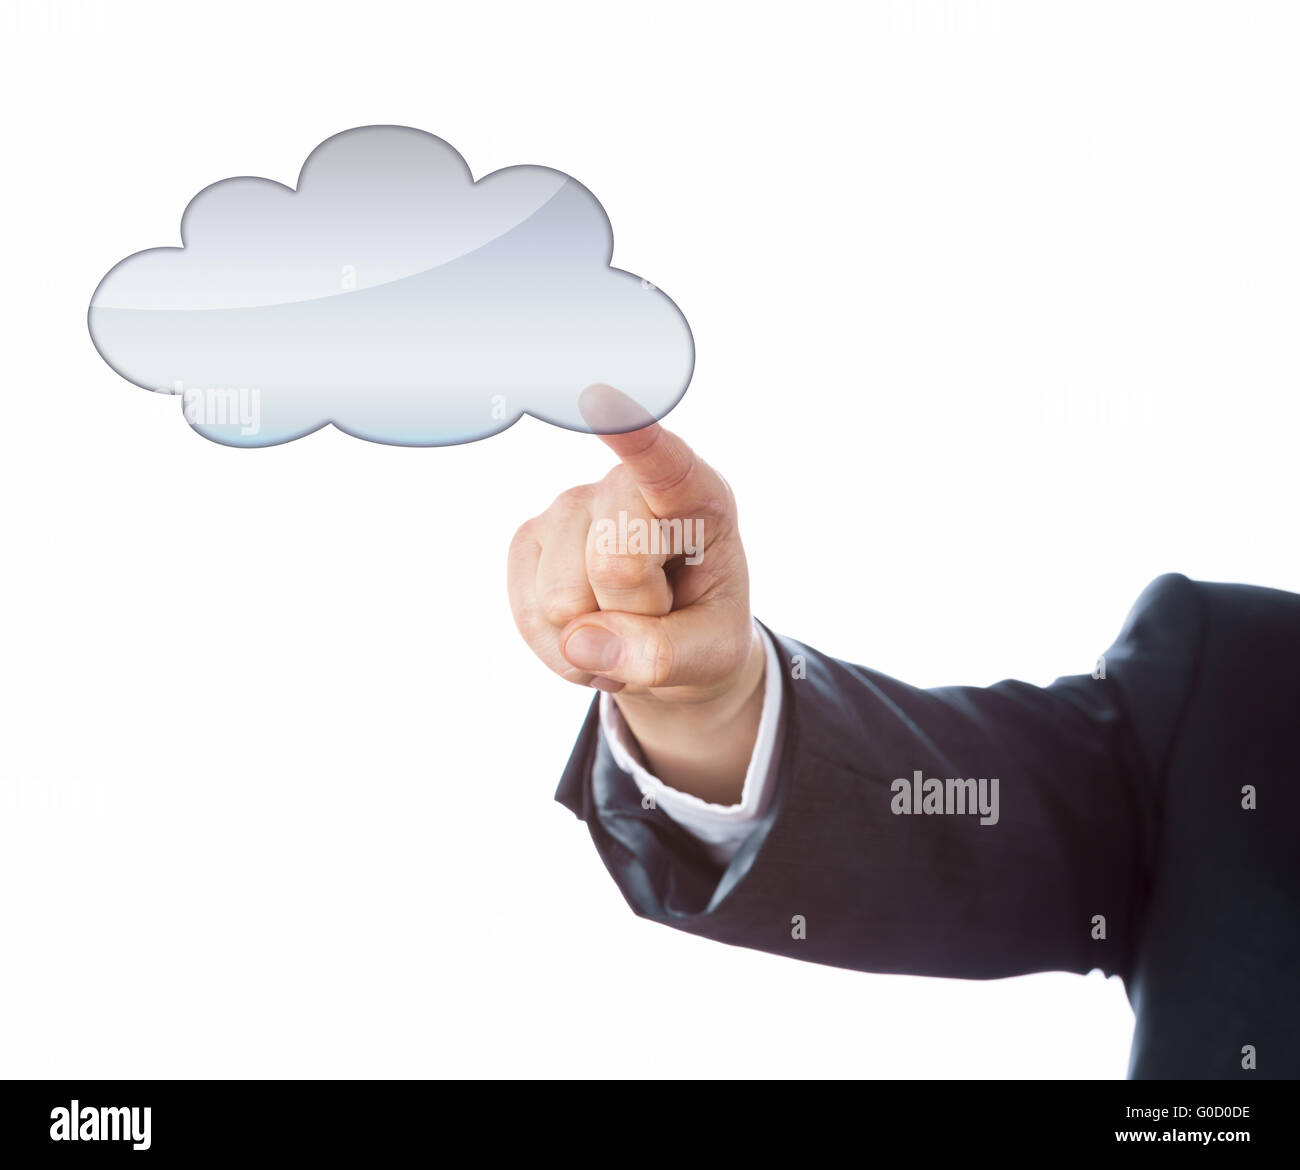 Arm im Anzug auf Cloud-Computing-Symbol zeigt Stockfoto